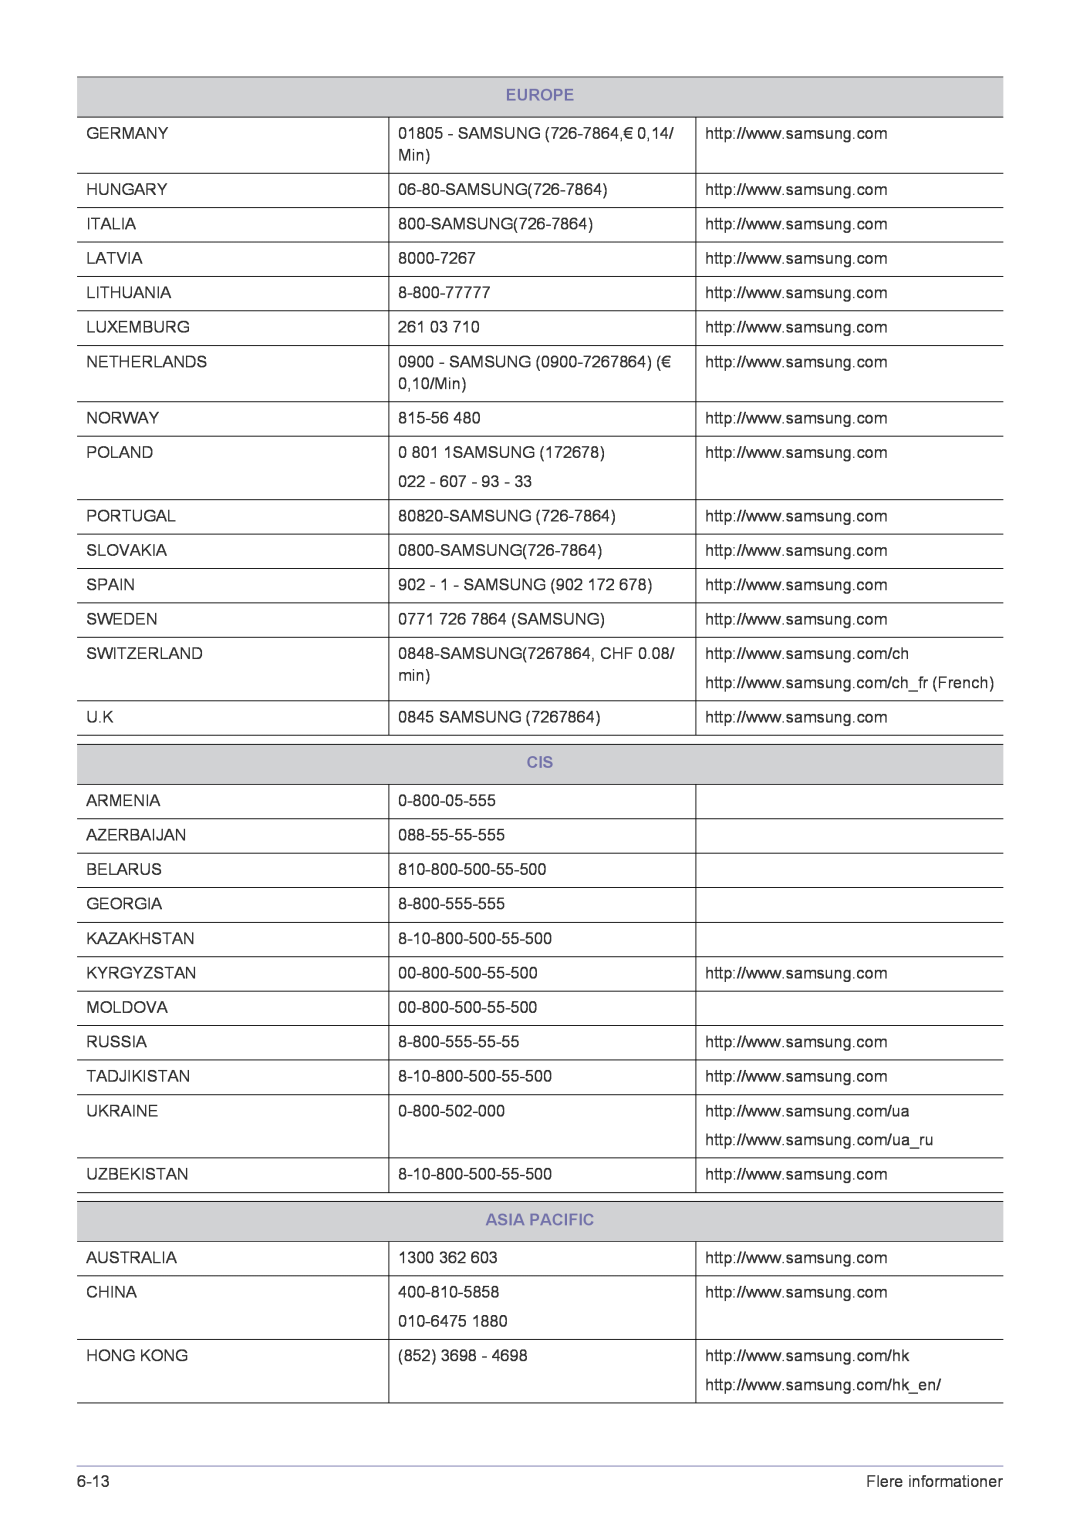 Samsung LS22X3HKFE/EN, LS24X3HKFE/EN, LS24X3HKFN/EN, LS23X3HKFN/EN manual Europe, Asia Pacific 